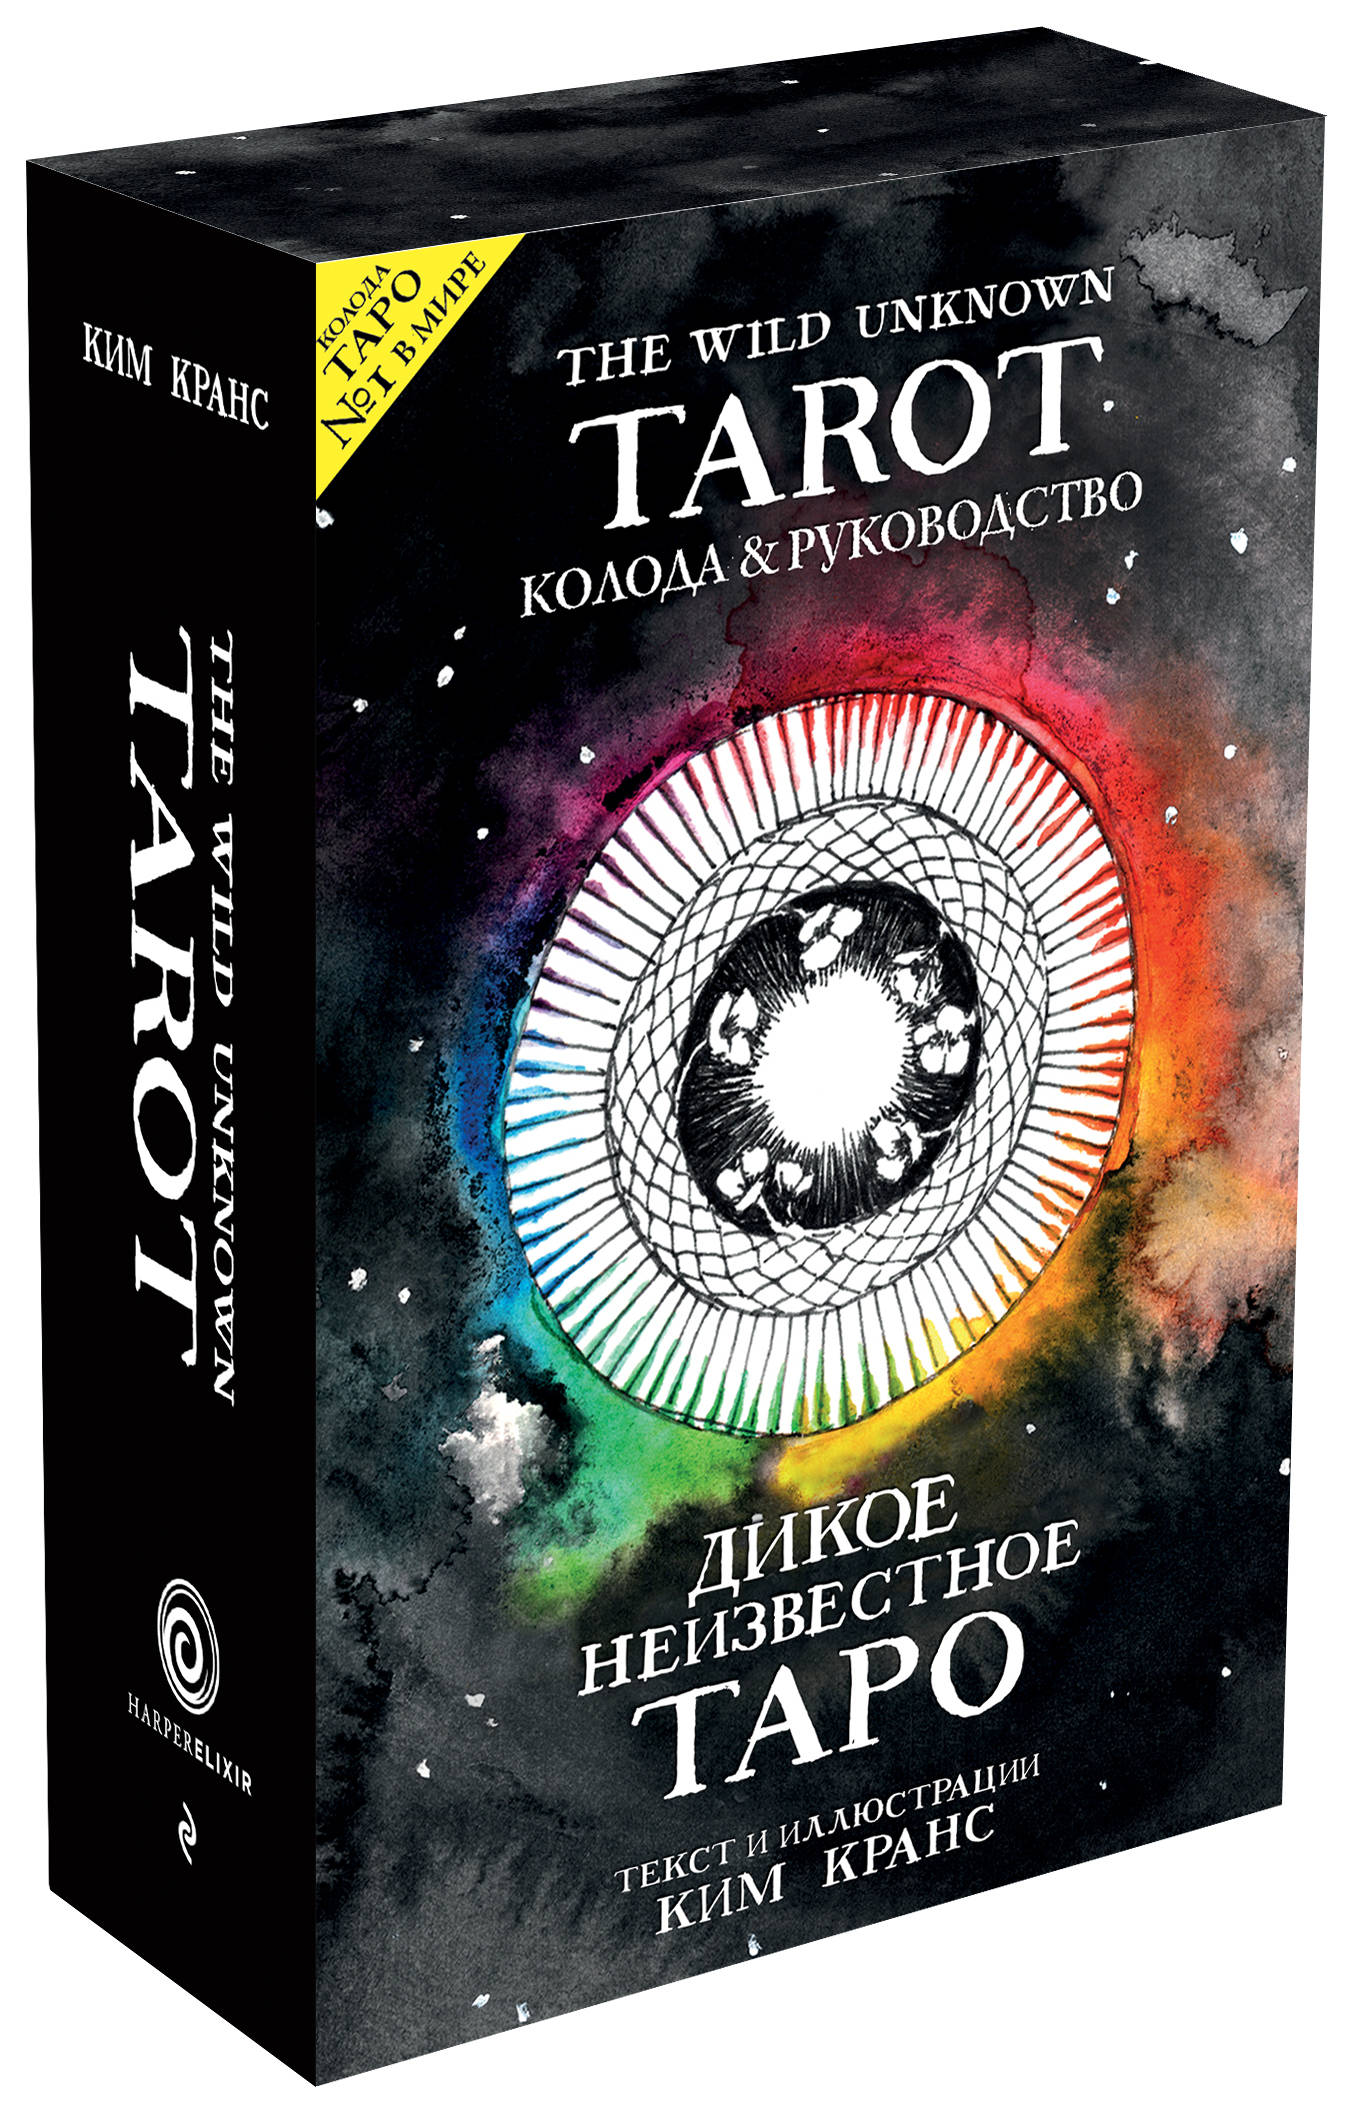 The Wild Unknown Tarot: Дикое Неизвестное Таро (78 карт и руководство в подарочном футляре) цена и фото